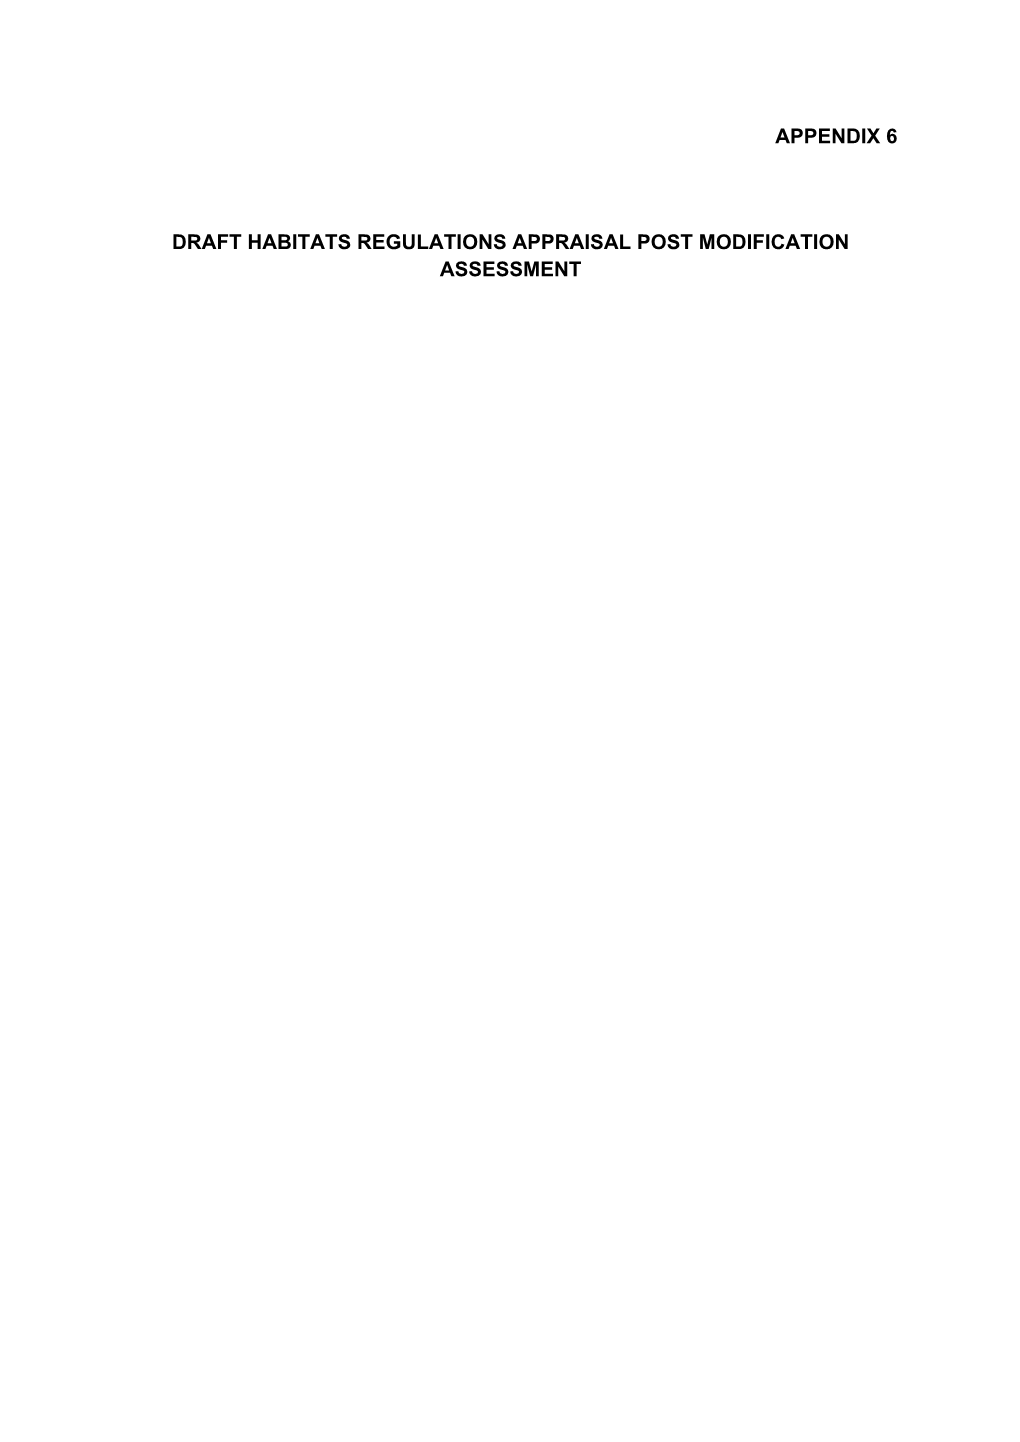 Appendix 6 Draft Habitats Regulations Appraisal Post Modification Assessment